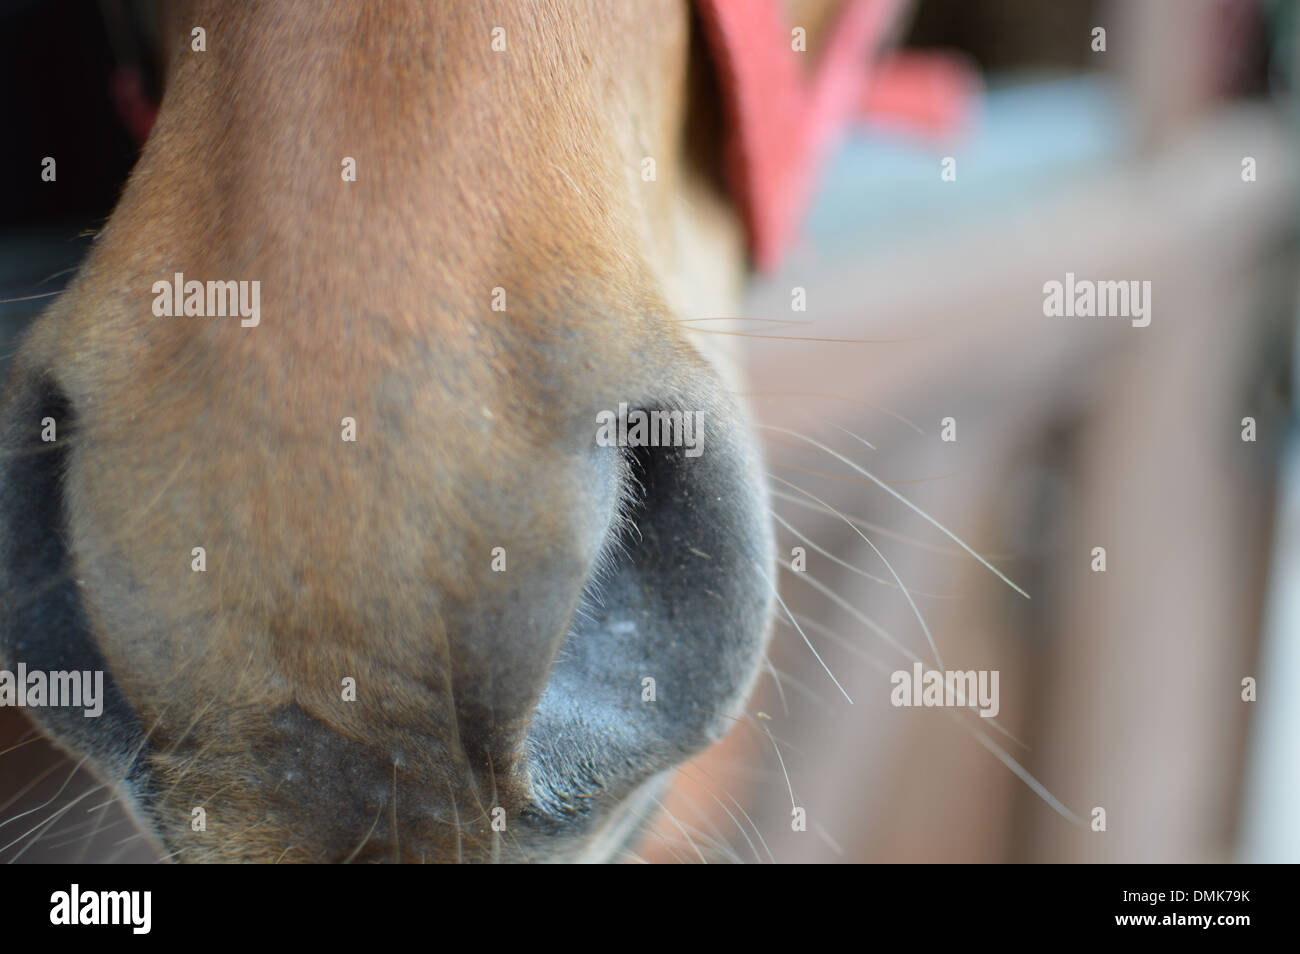 Cerca de la nariz del caballo Foto de stock